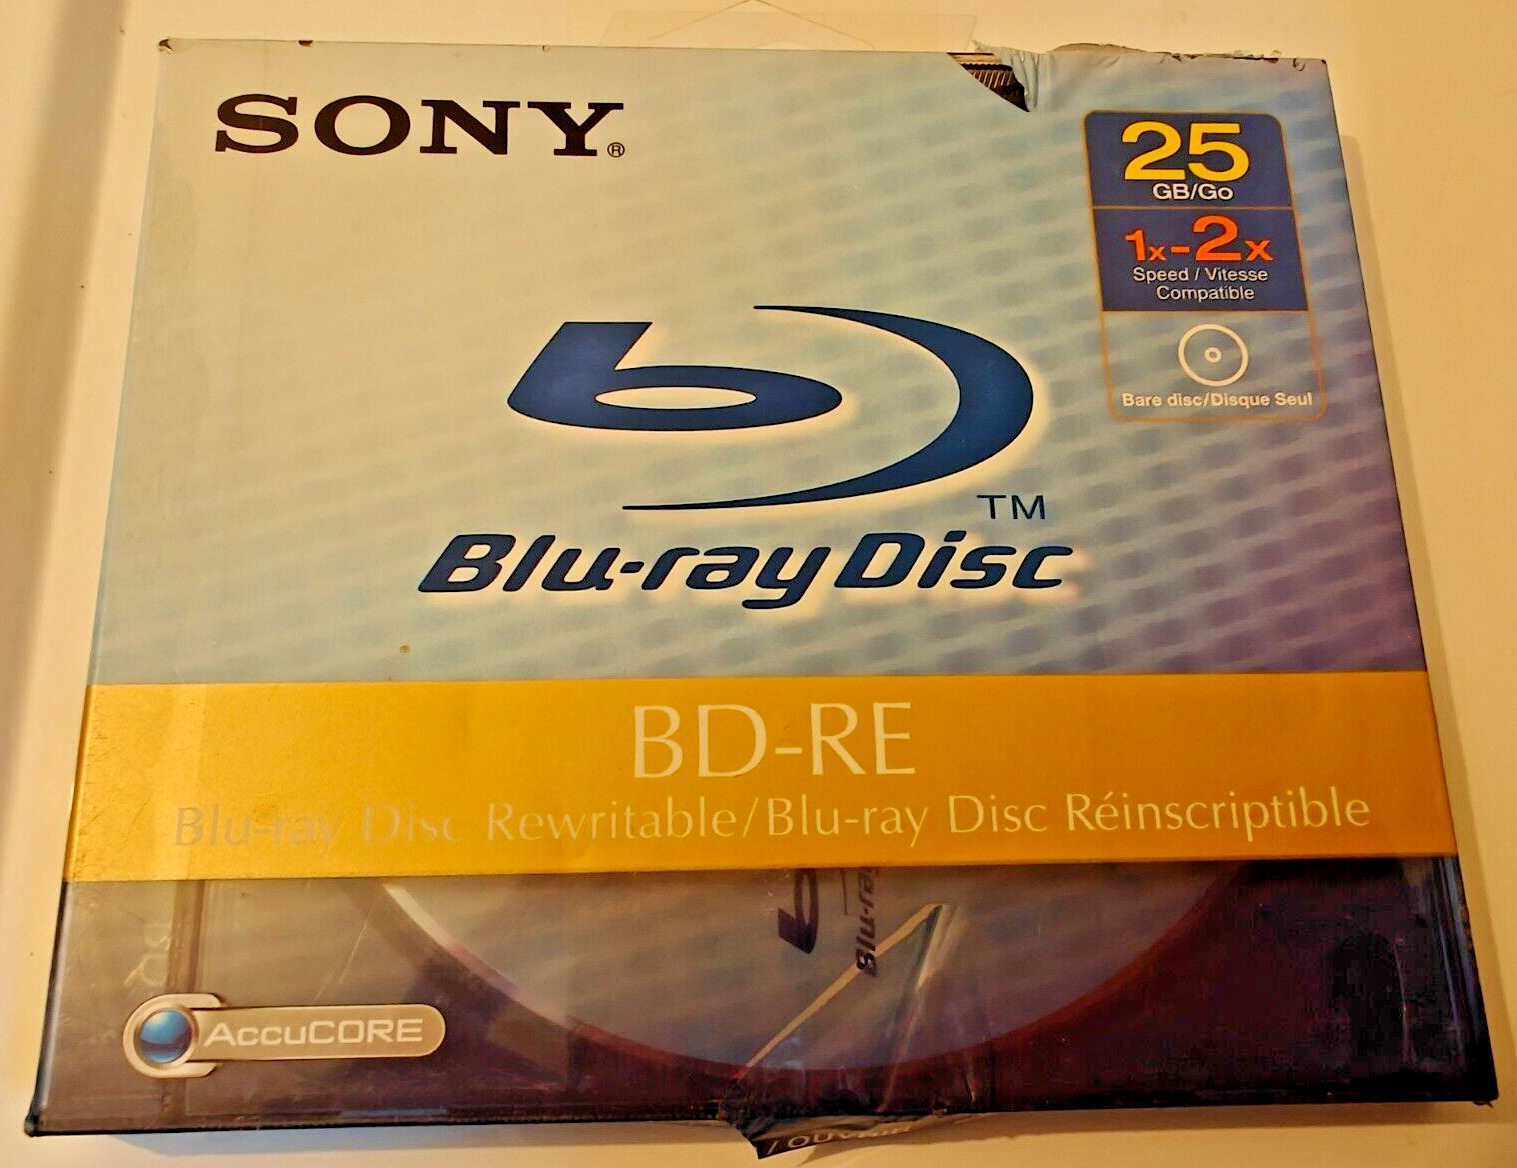 NEW & SEALED Sony Blu-Ray Rewritable BD-RE Dis  25GB 1x-2x Speed w/ AccuCore